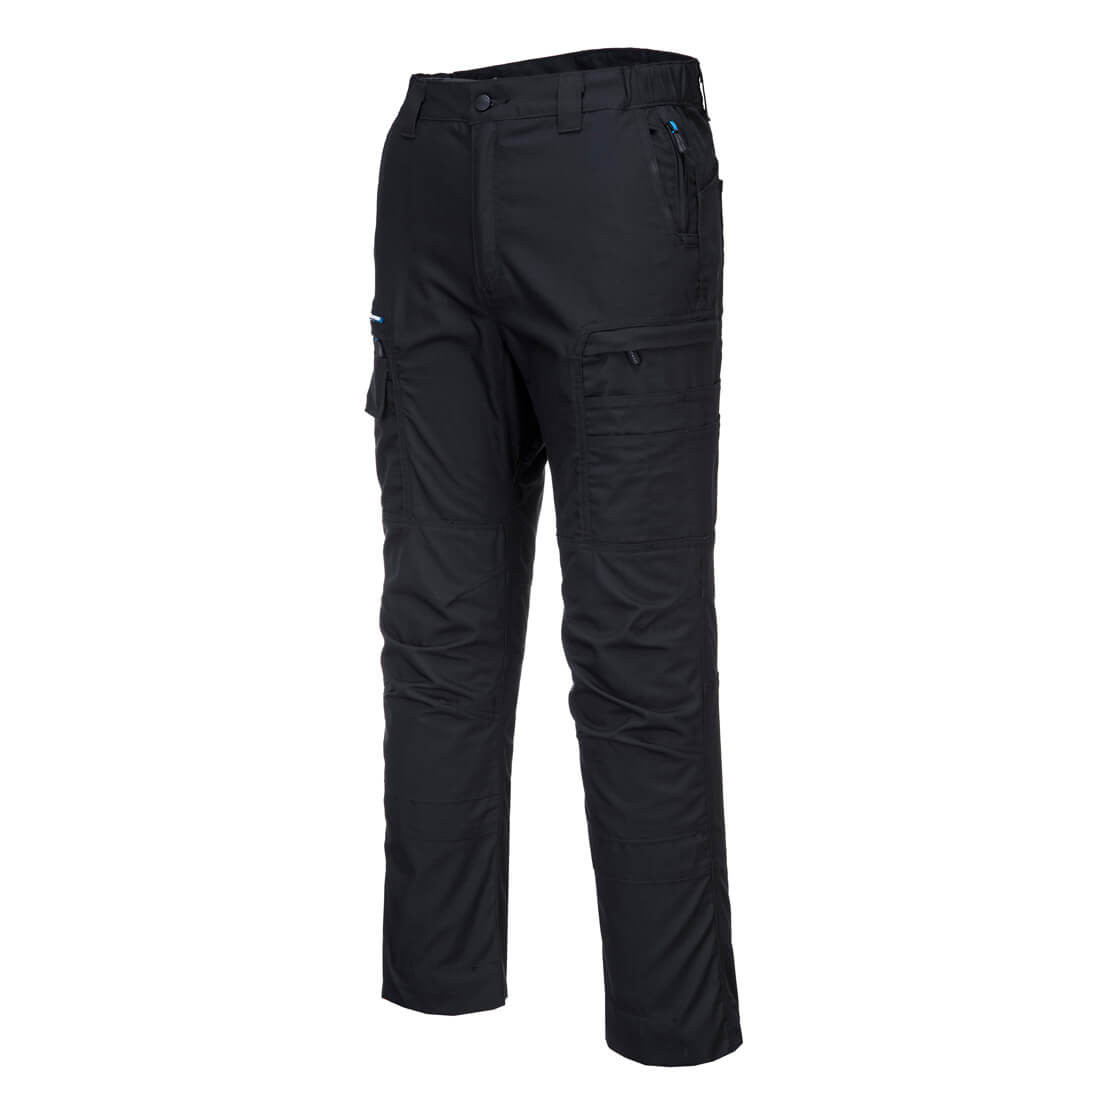 Pantaloni Ripstop KX3 - Imbracaminte de protectie